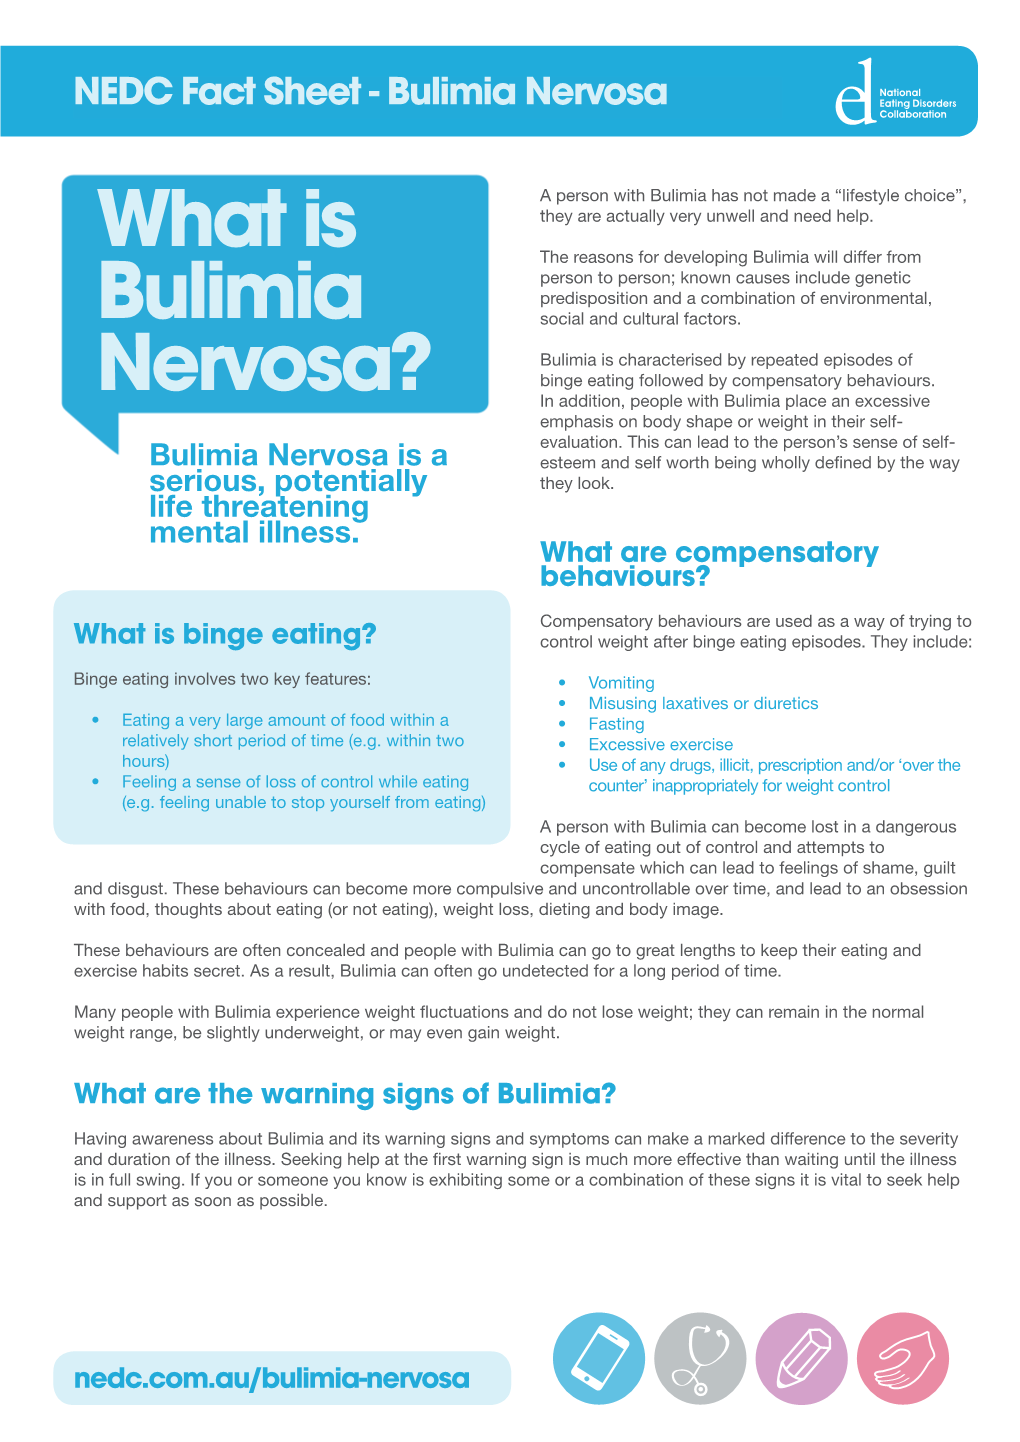 What Is Bulimia Nervosa?